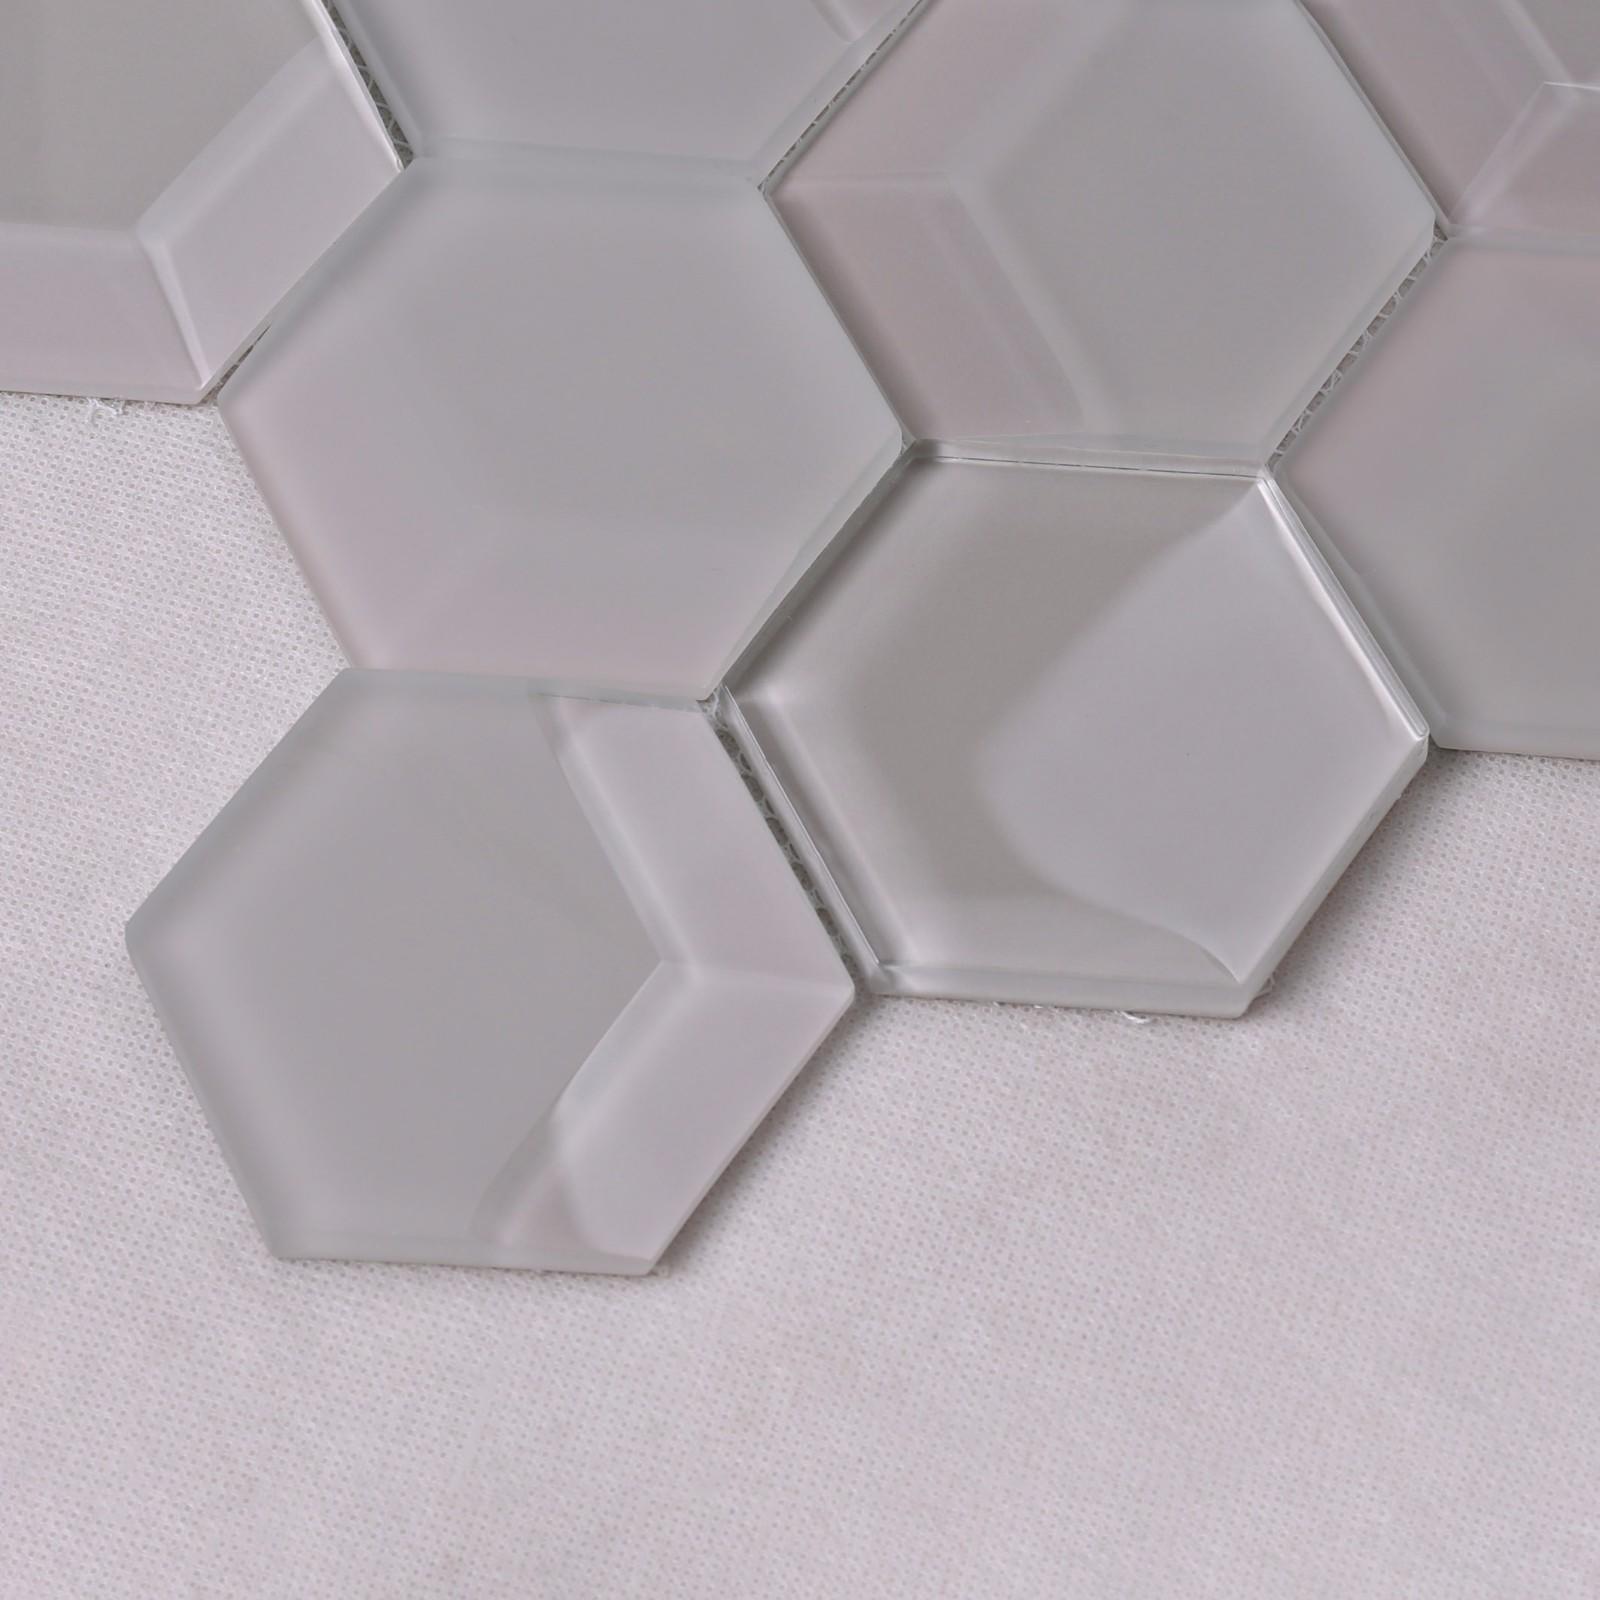 Heng Xing 3x4 glass tiles for kitchen golden for living room